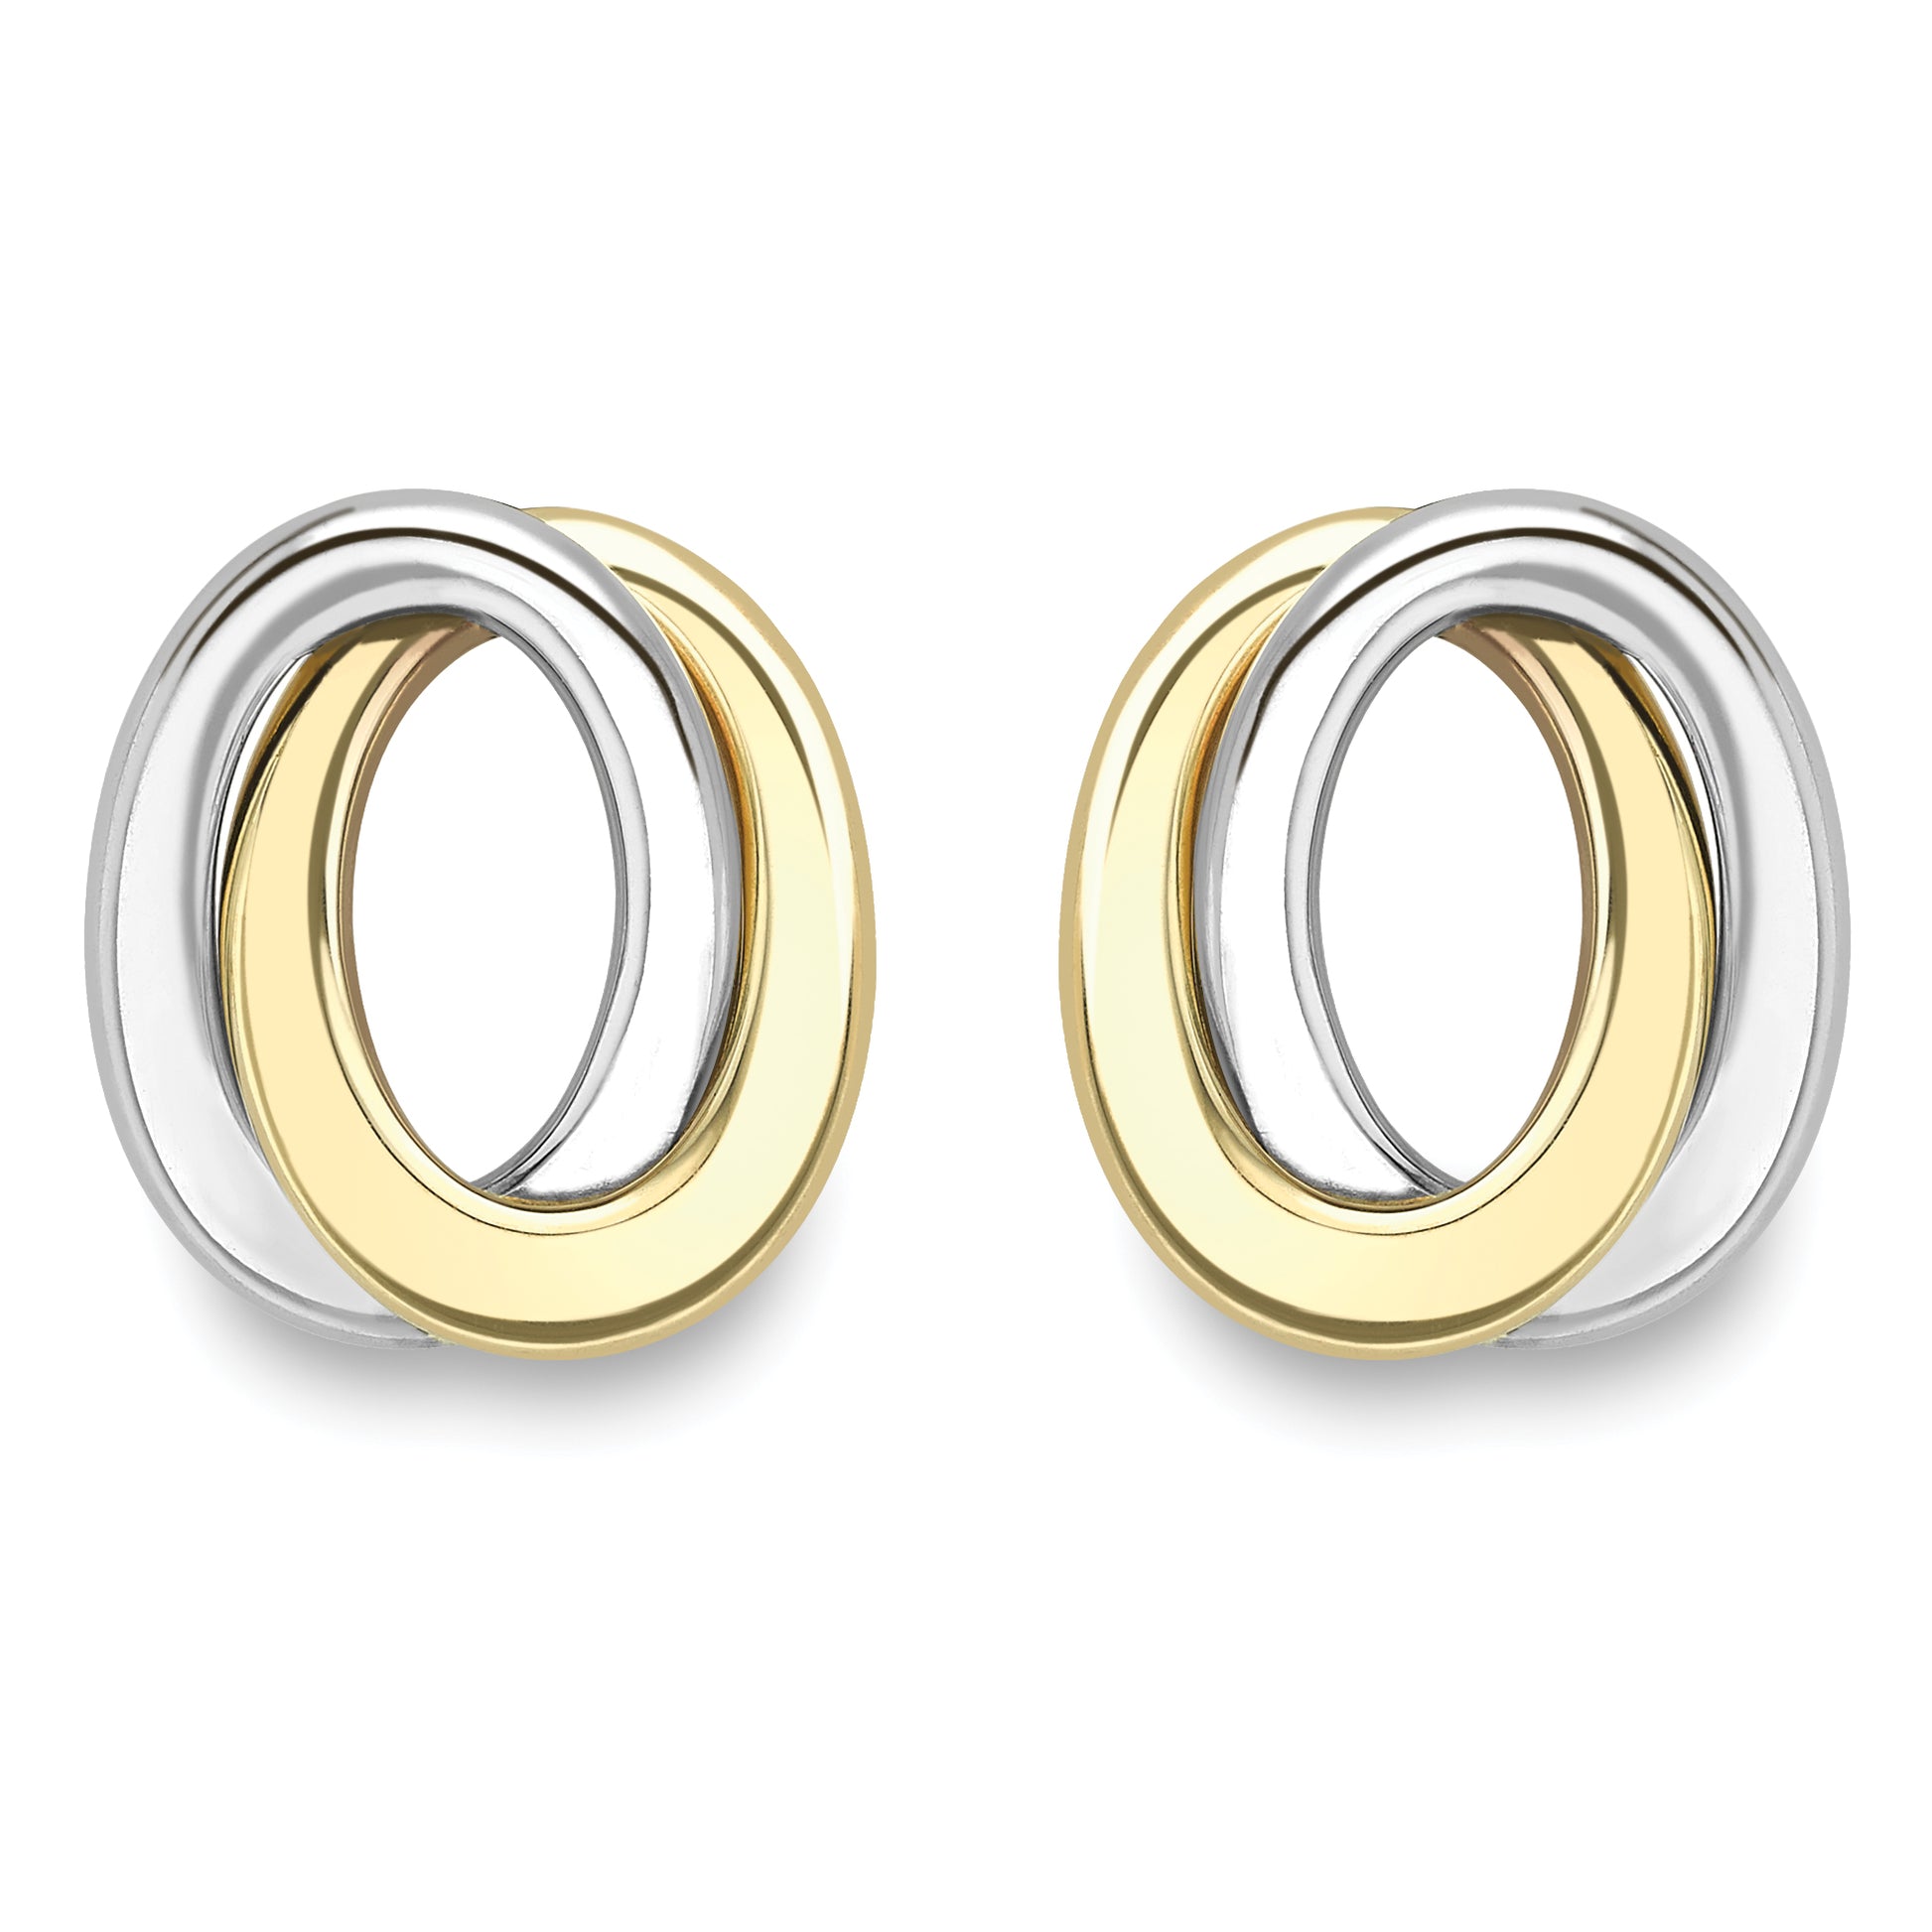 9ct White & Yellow Gold  Interlocked Oval Rings Stud Earrings - ERNR02242